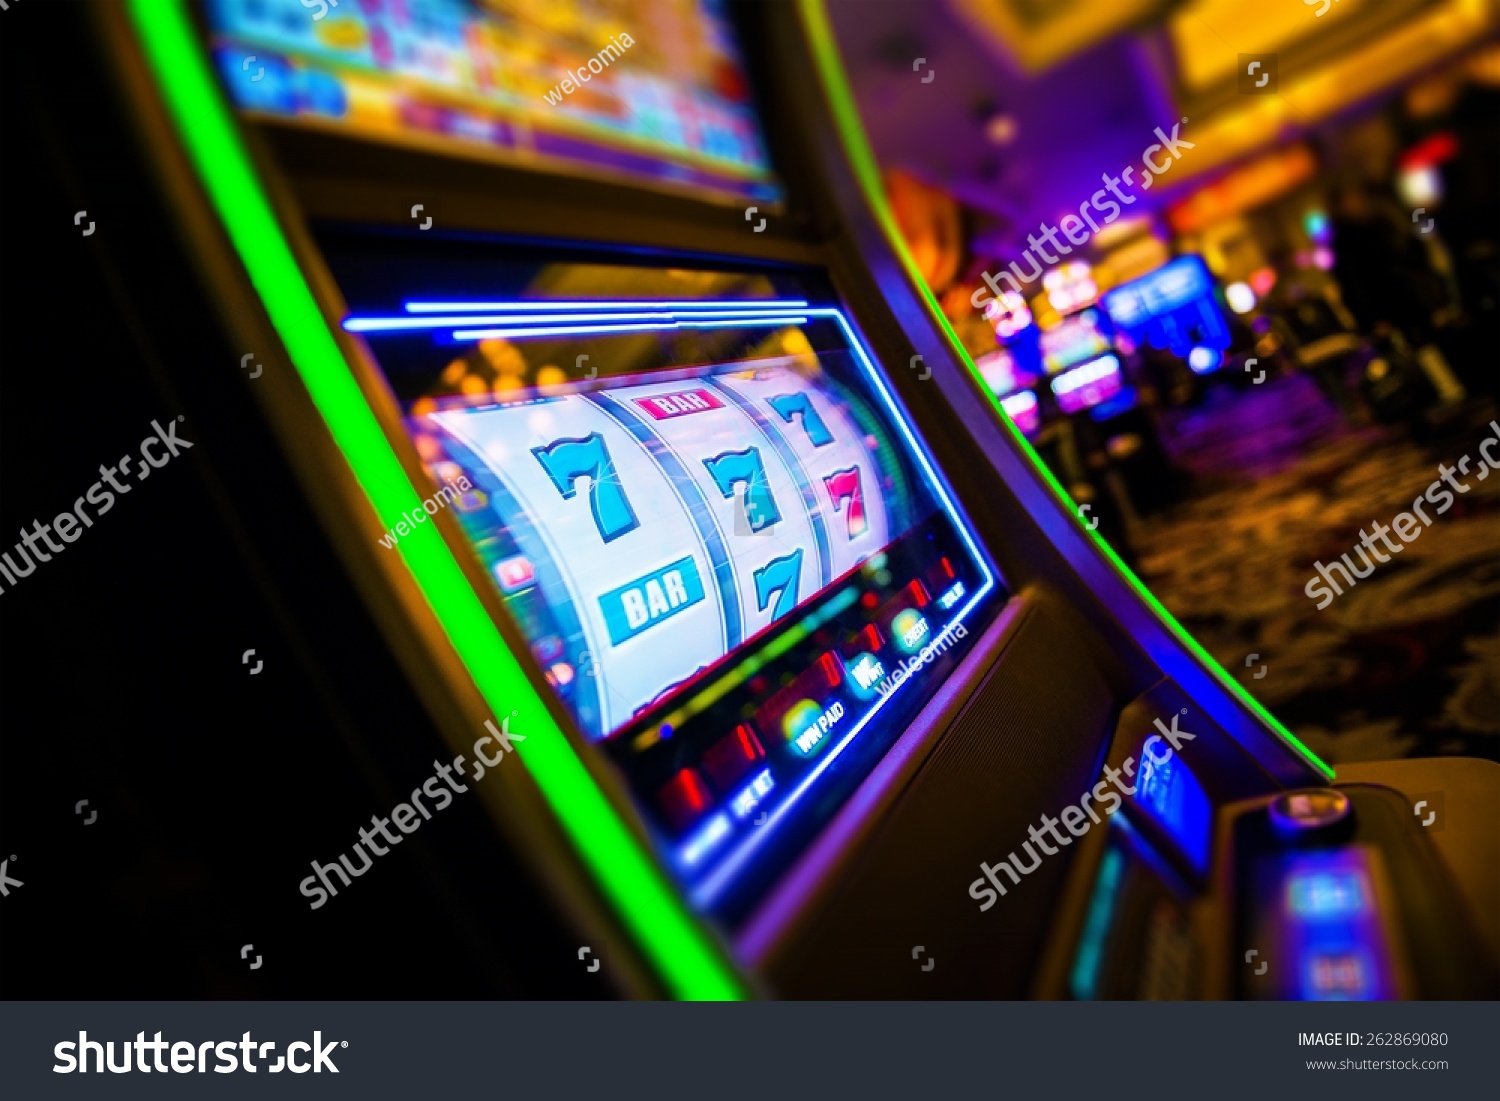 Casino Slot Machines. Las Vegas Strip Digital Slot Machine Closeup. Sin City Gabling. Las Vegas, United States. #262869080